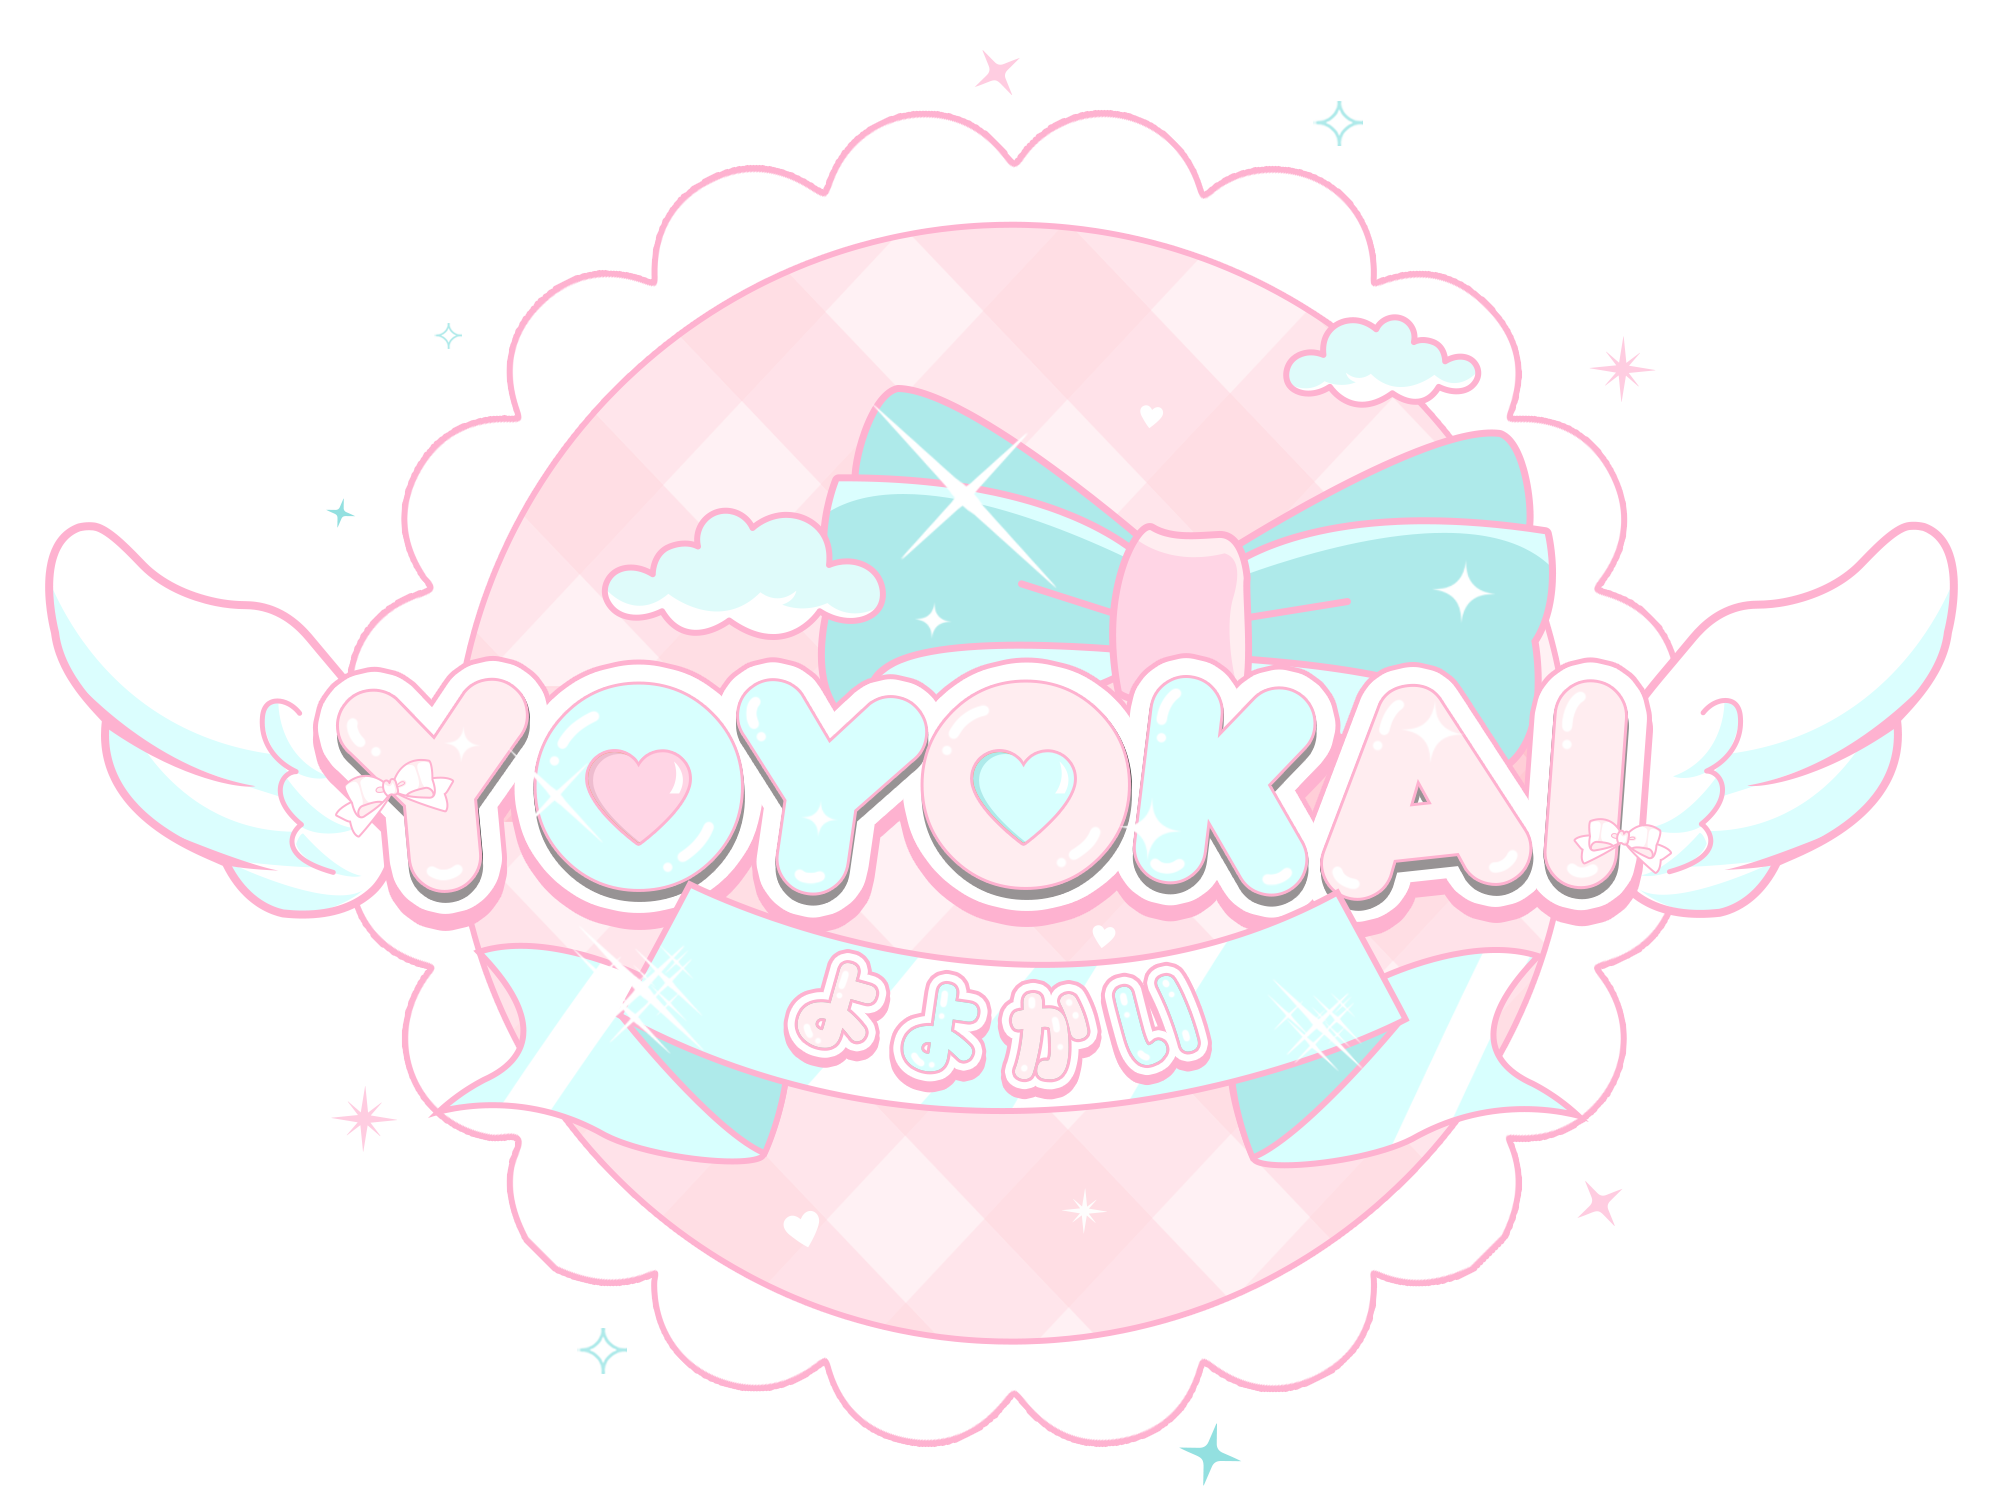 YoYokai Logo